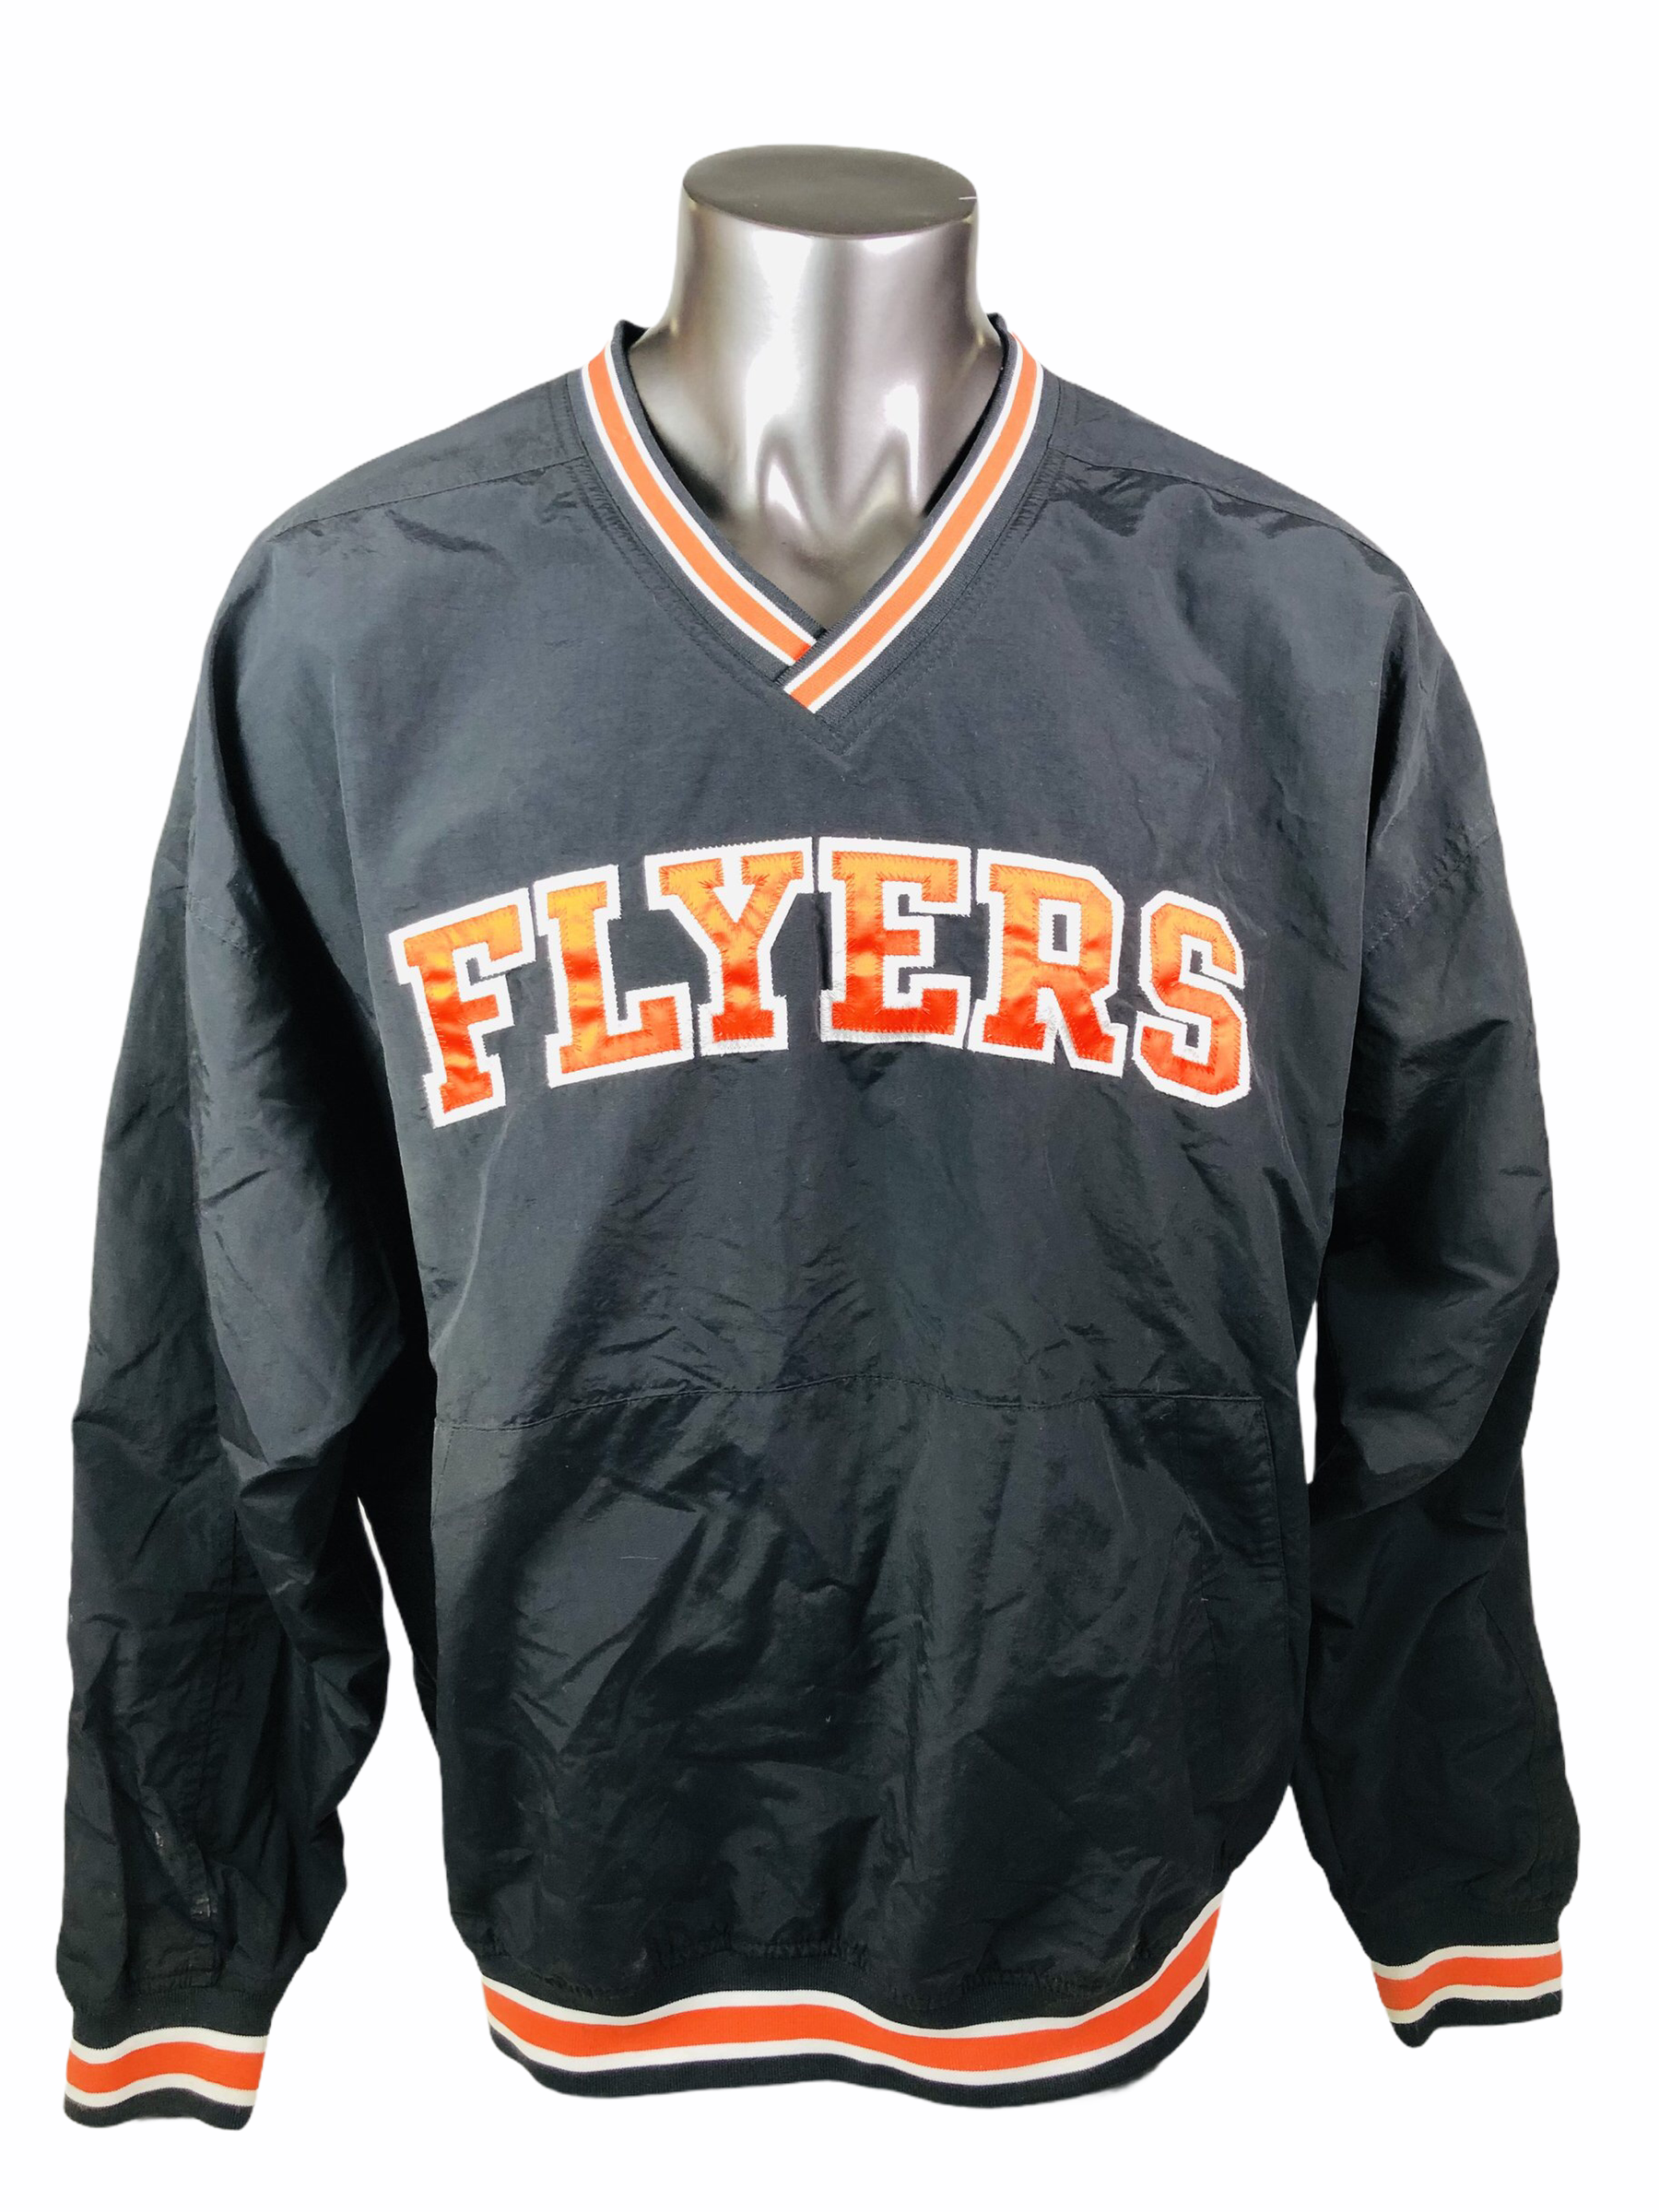 Philadelphia Flyers Apparel, Flyers Clothing & Gear